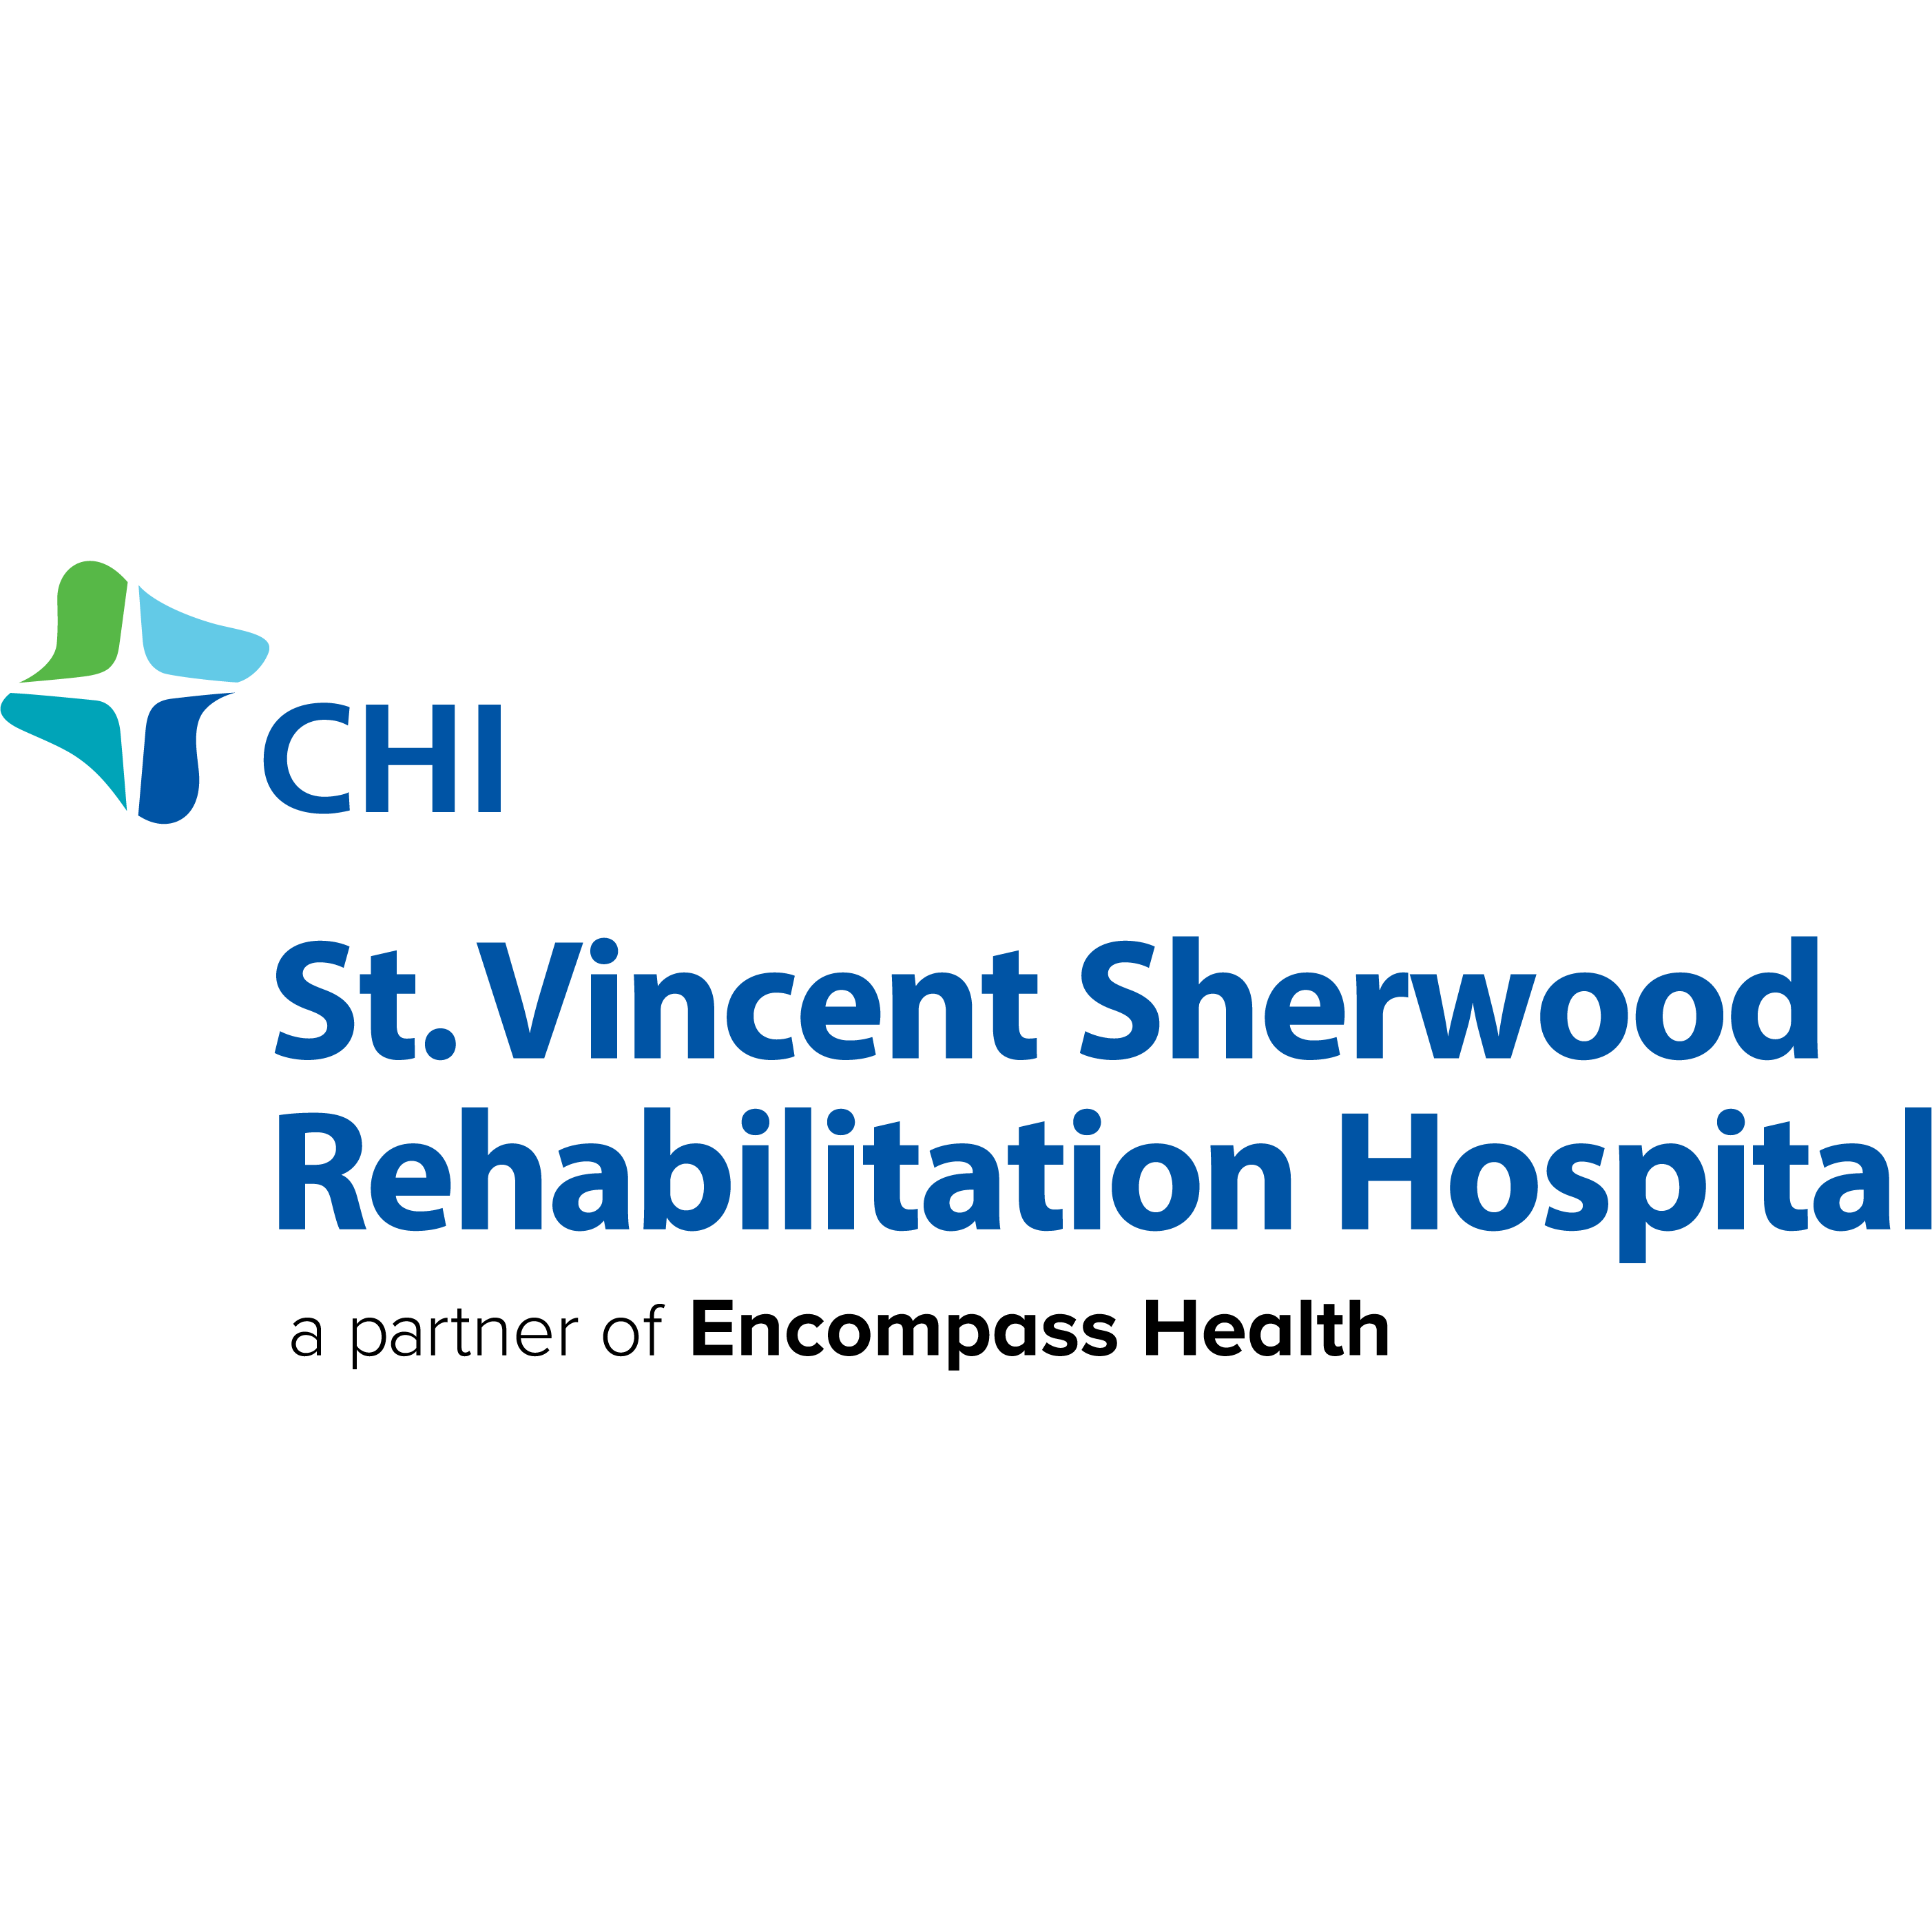 CHI St. Vincent Sherwood Rehabilitation Hospital